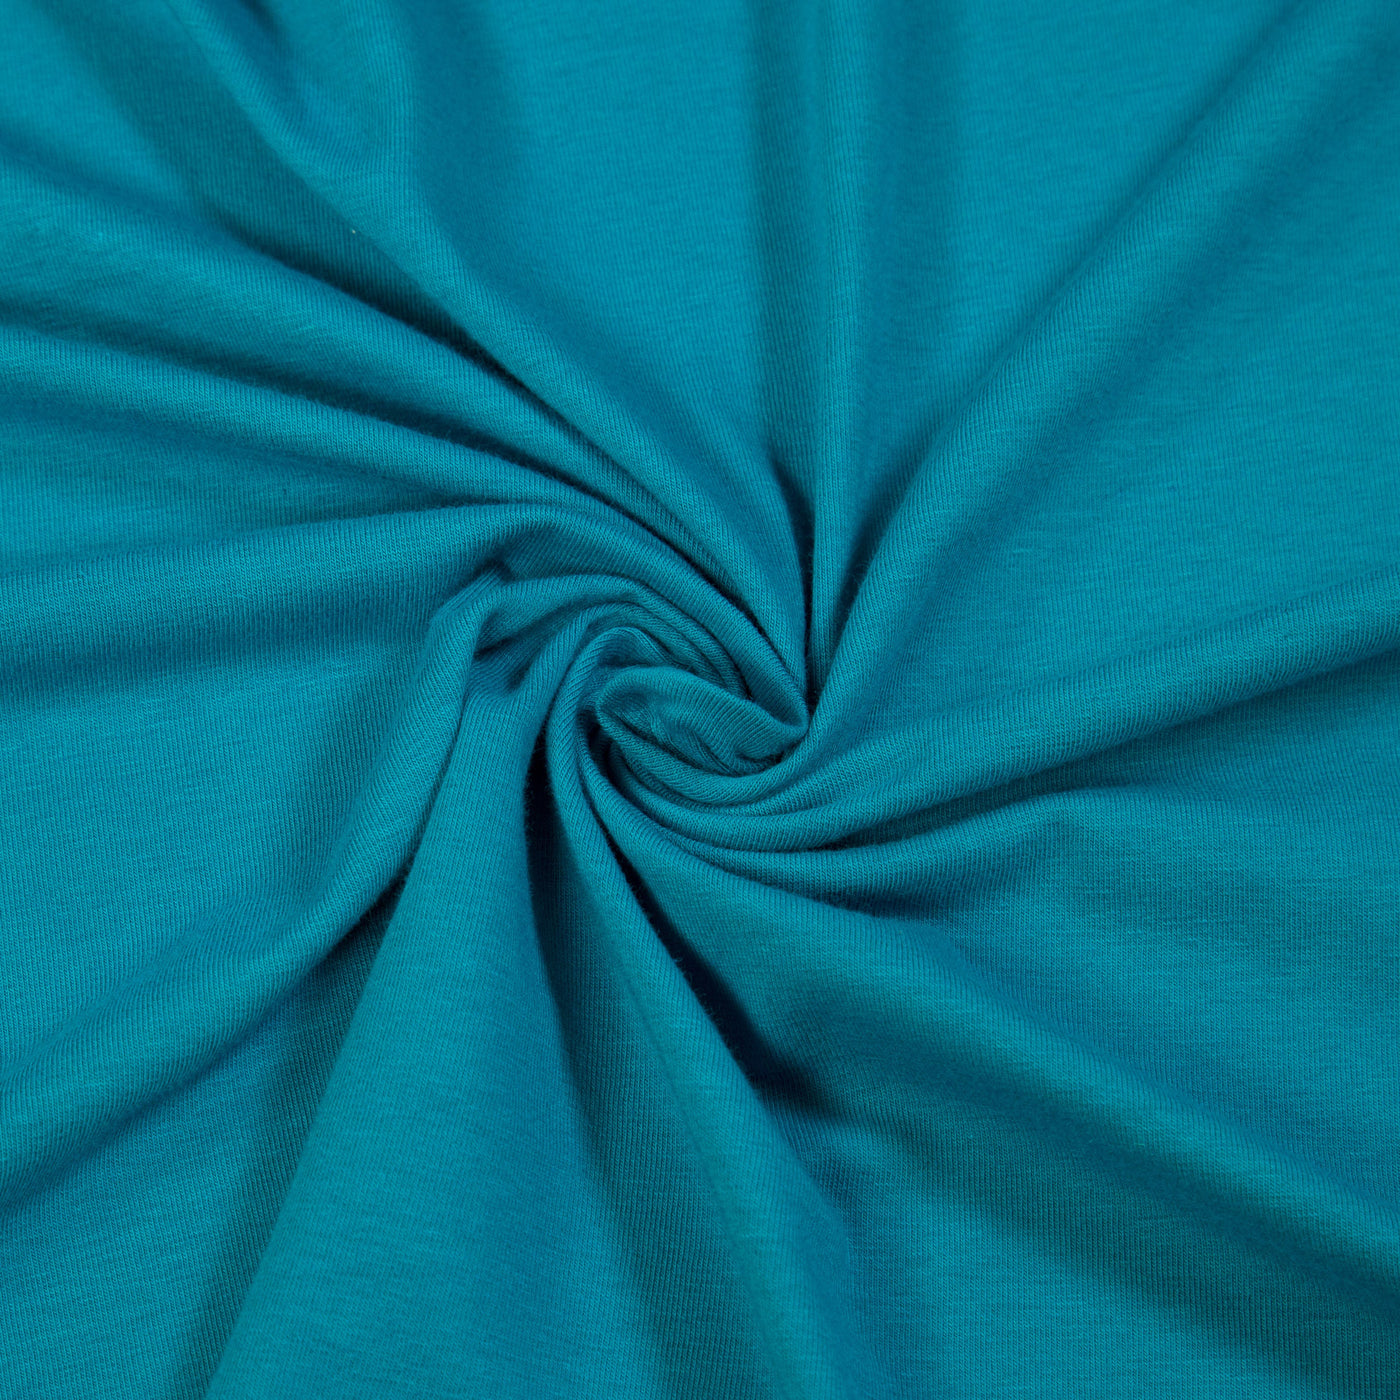 10oz Cotton Spandex Jersey Fabric | Jade | Shop FabricLA.com